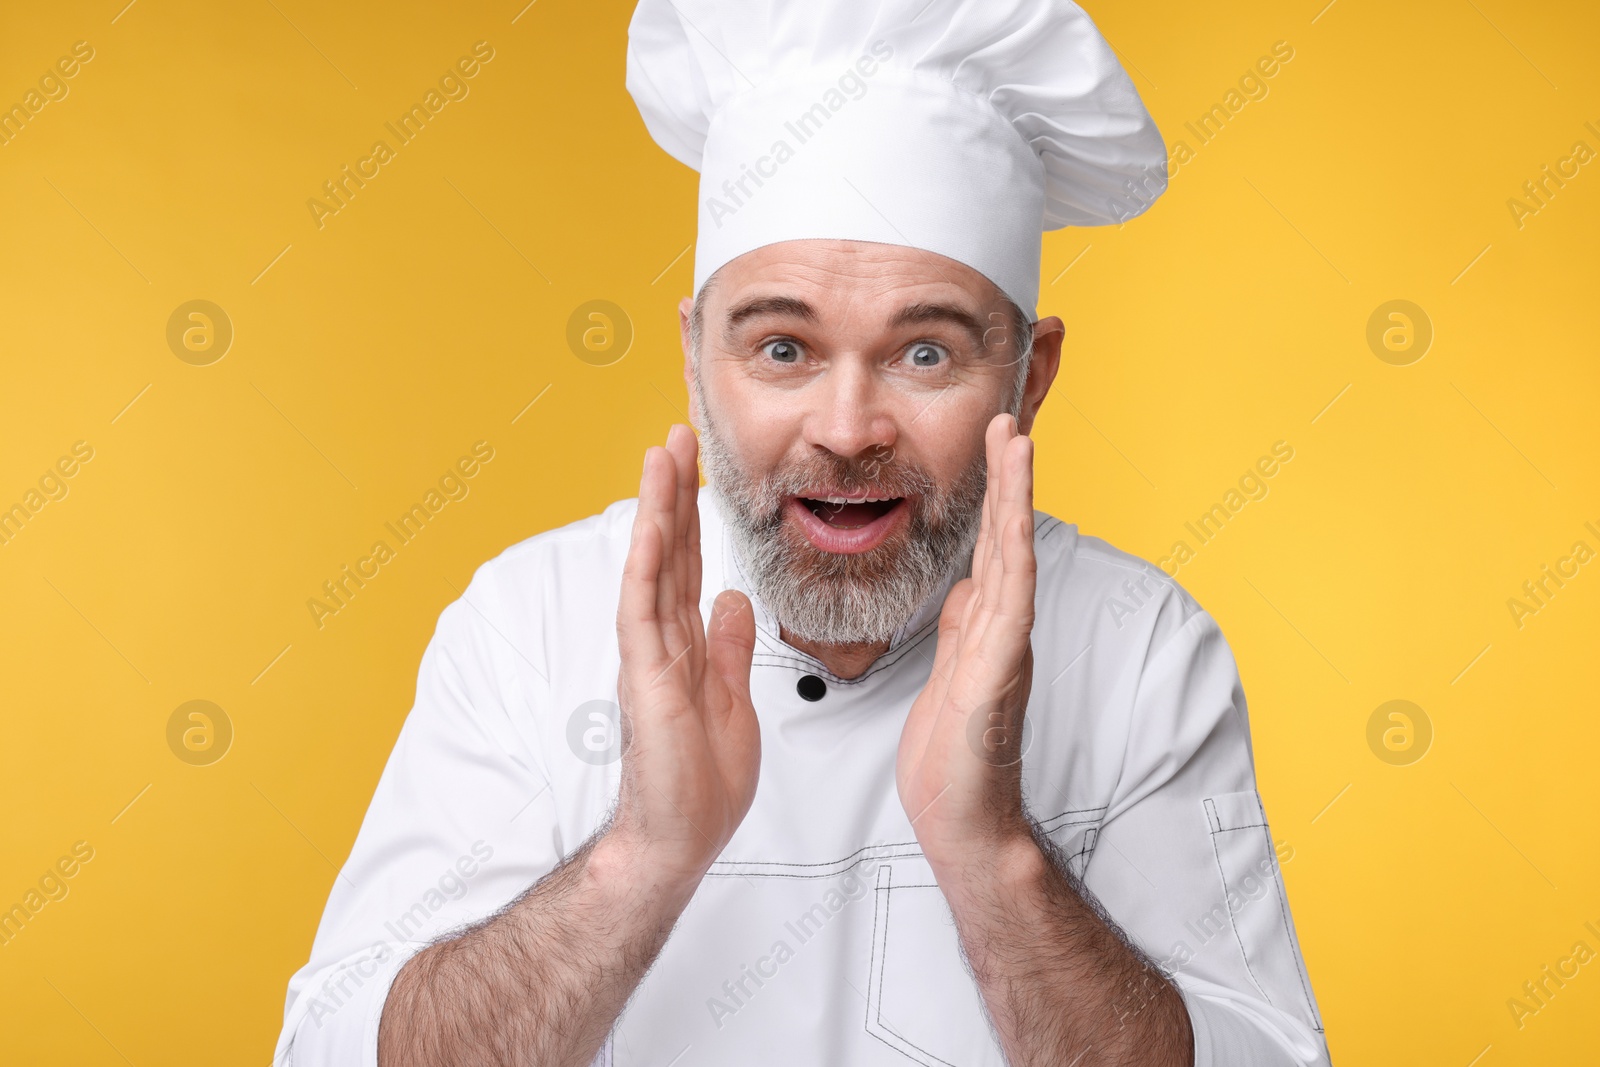 Photo of Surprised chef in uniform on orange background